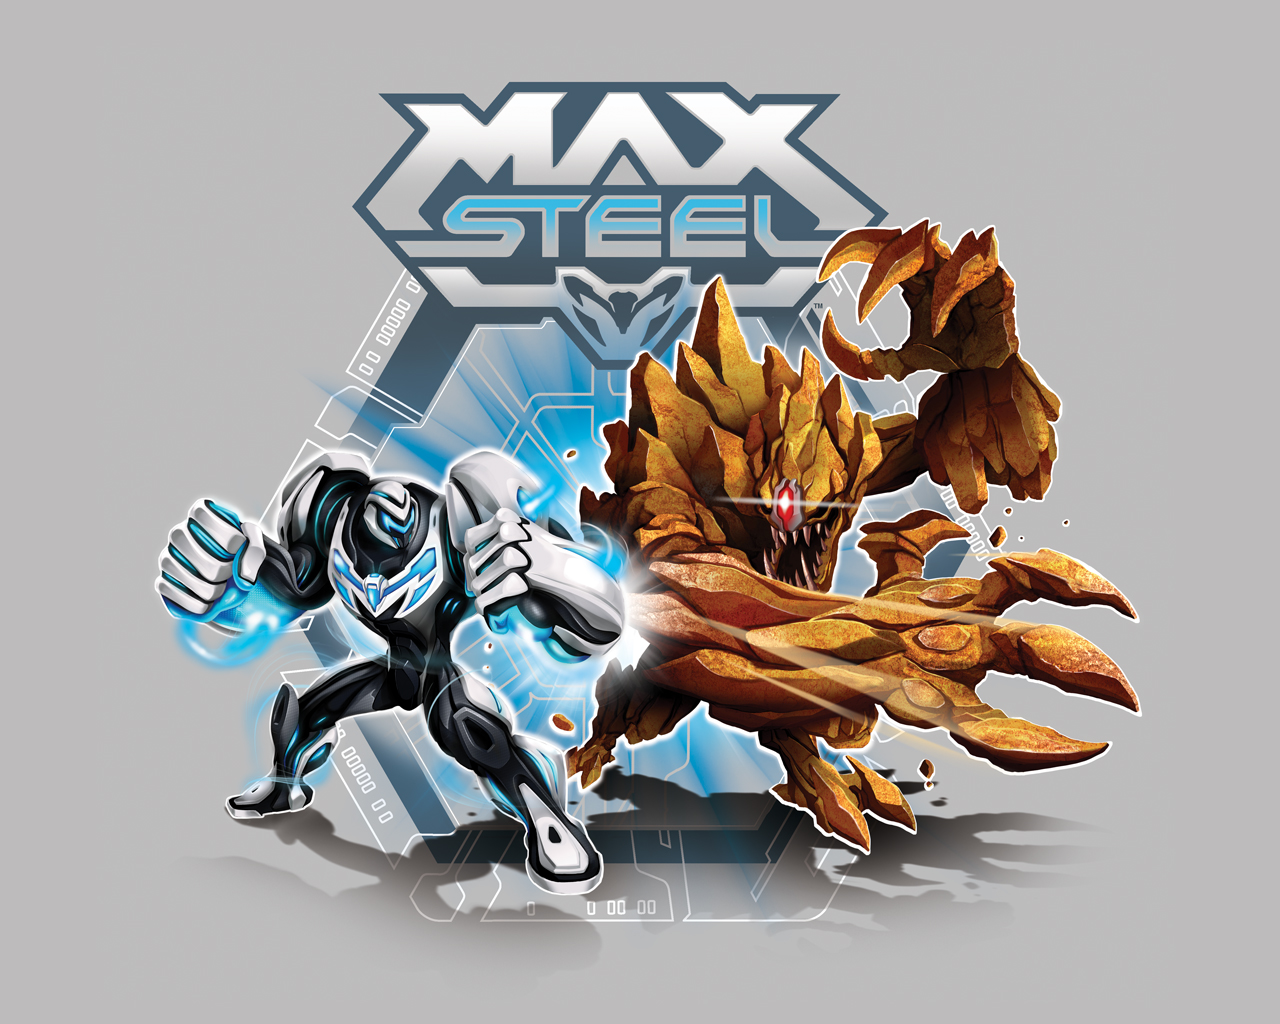 Max Steel (2013) Wallpapers